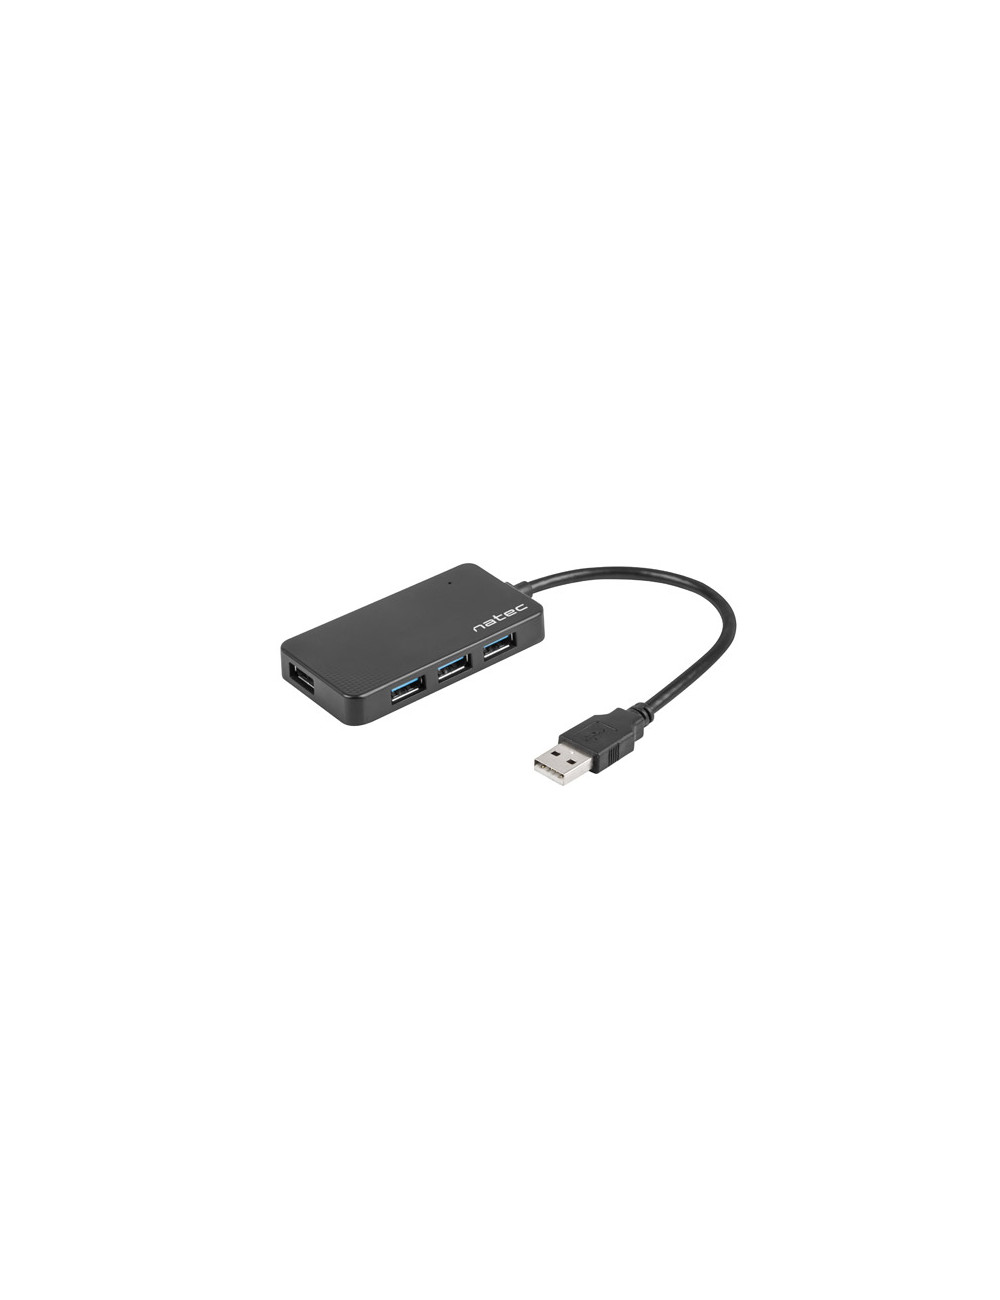 Natec USB 3.0 HUB, Moth, 4-Port, Black